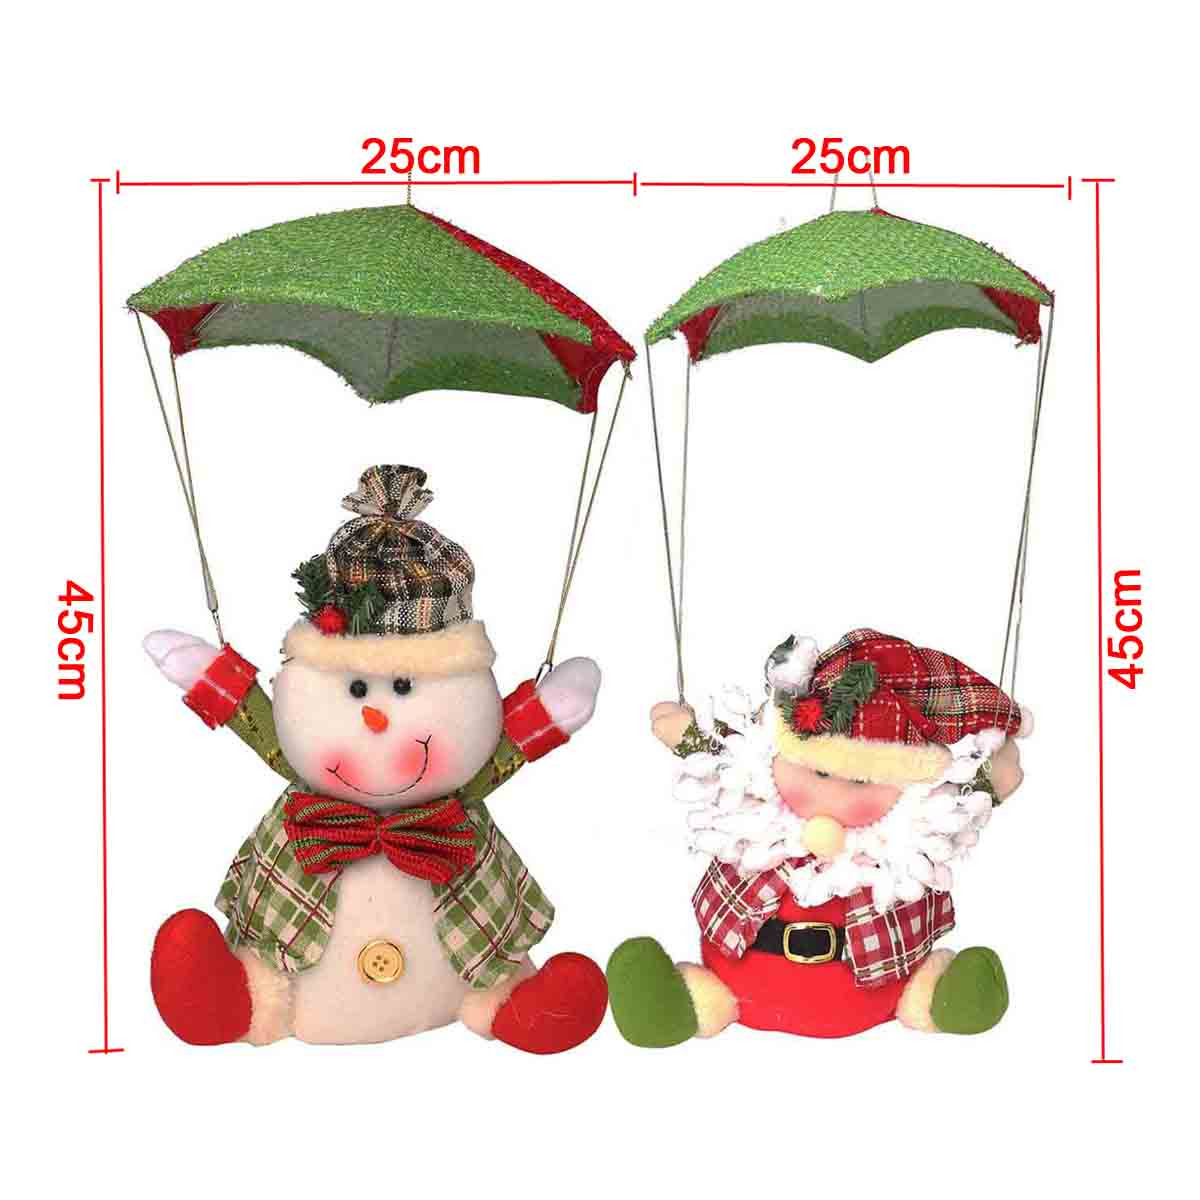 Santa-Claus-Snowman-In-Parachute-Christmas-Xmas-Tree-Hanging-Home-Decor-Ornament-1086801-7